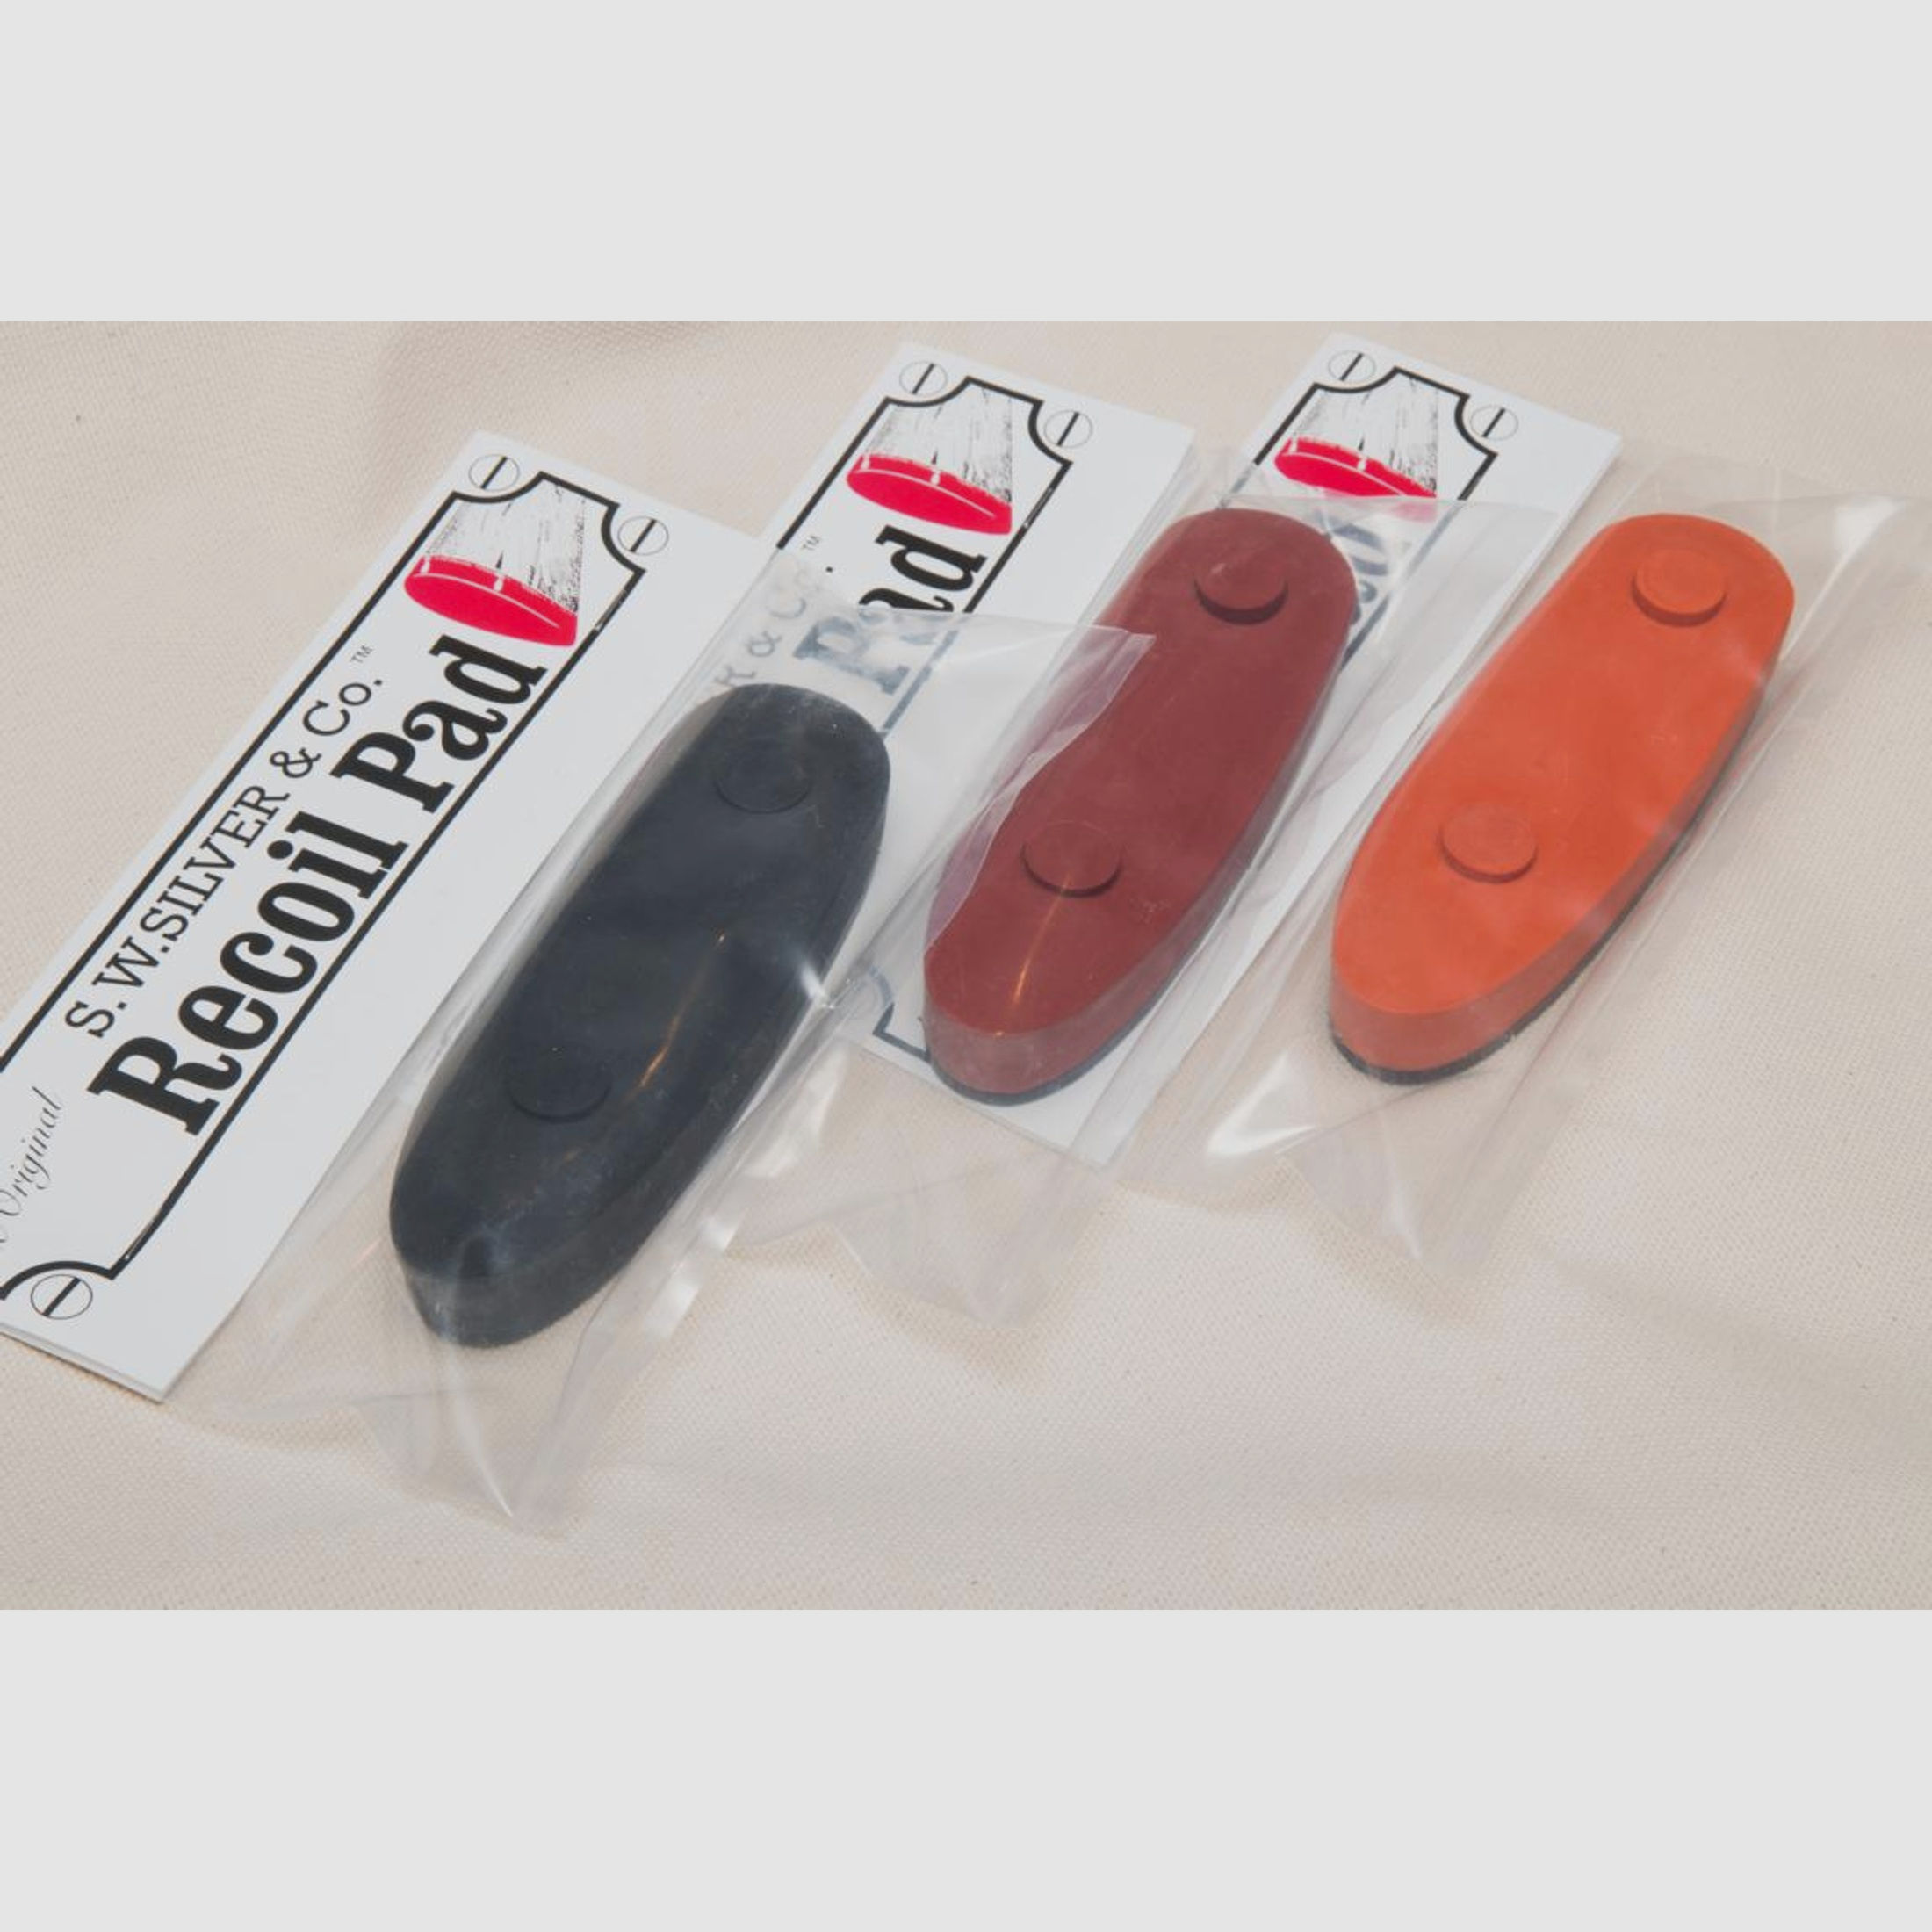 S.W. Silver Schaftkappe London rot mit Tropfnase - das Origial -  classic rubber recoil pad, Safari Gummischaftkappe No. 4